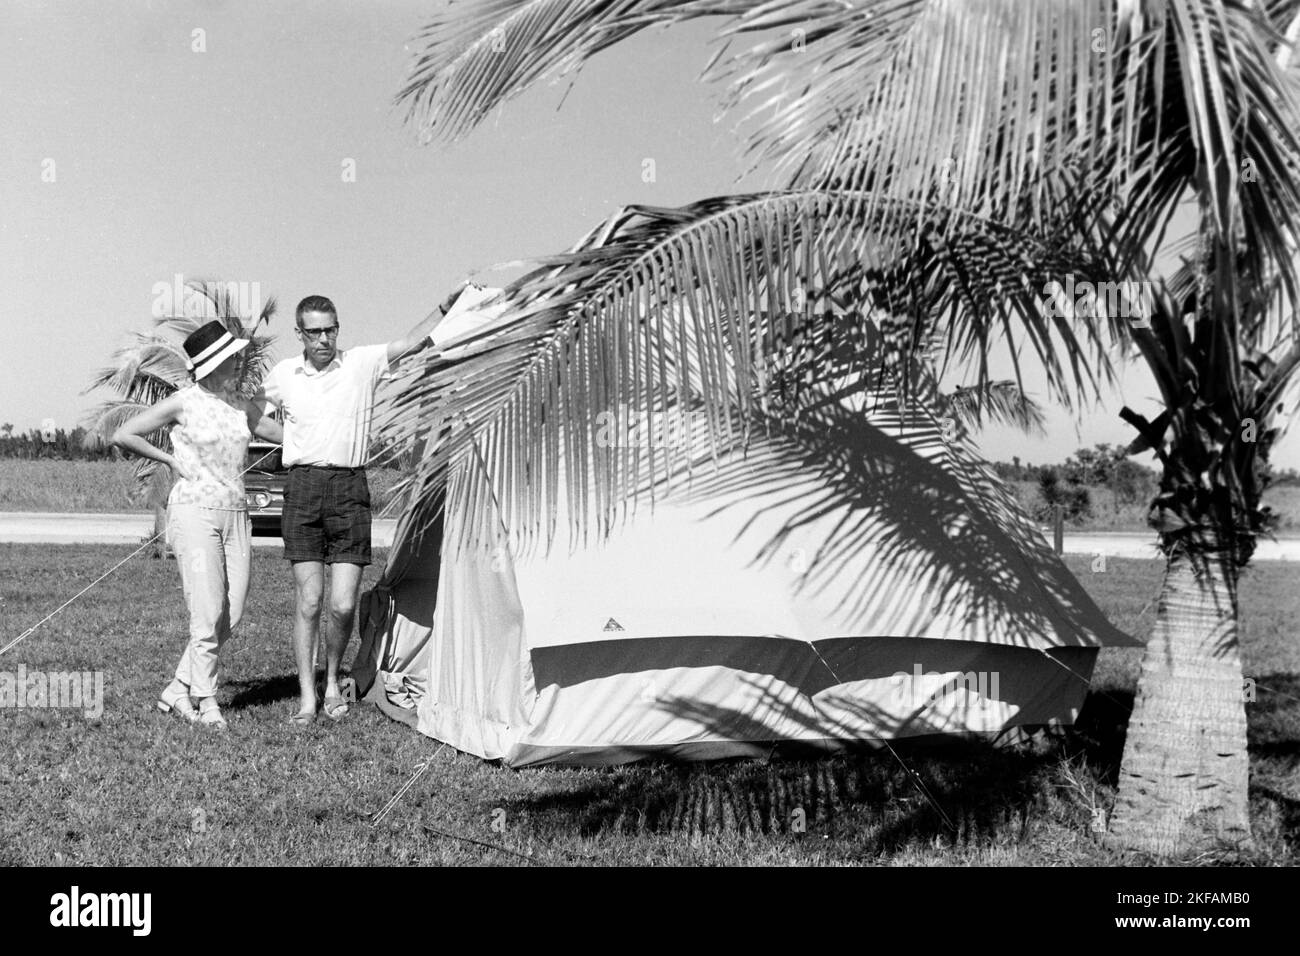 Paar posiert vor erfolgreich aufgebautem Zelt im Oleta River State Park, Miami, Florida, USA 1965. Couple posing in front of successfully erected tent at Oleta River State Park, Miami, Florida, USA 1965. Stock Photo